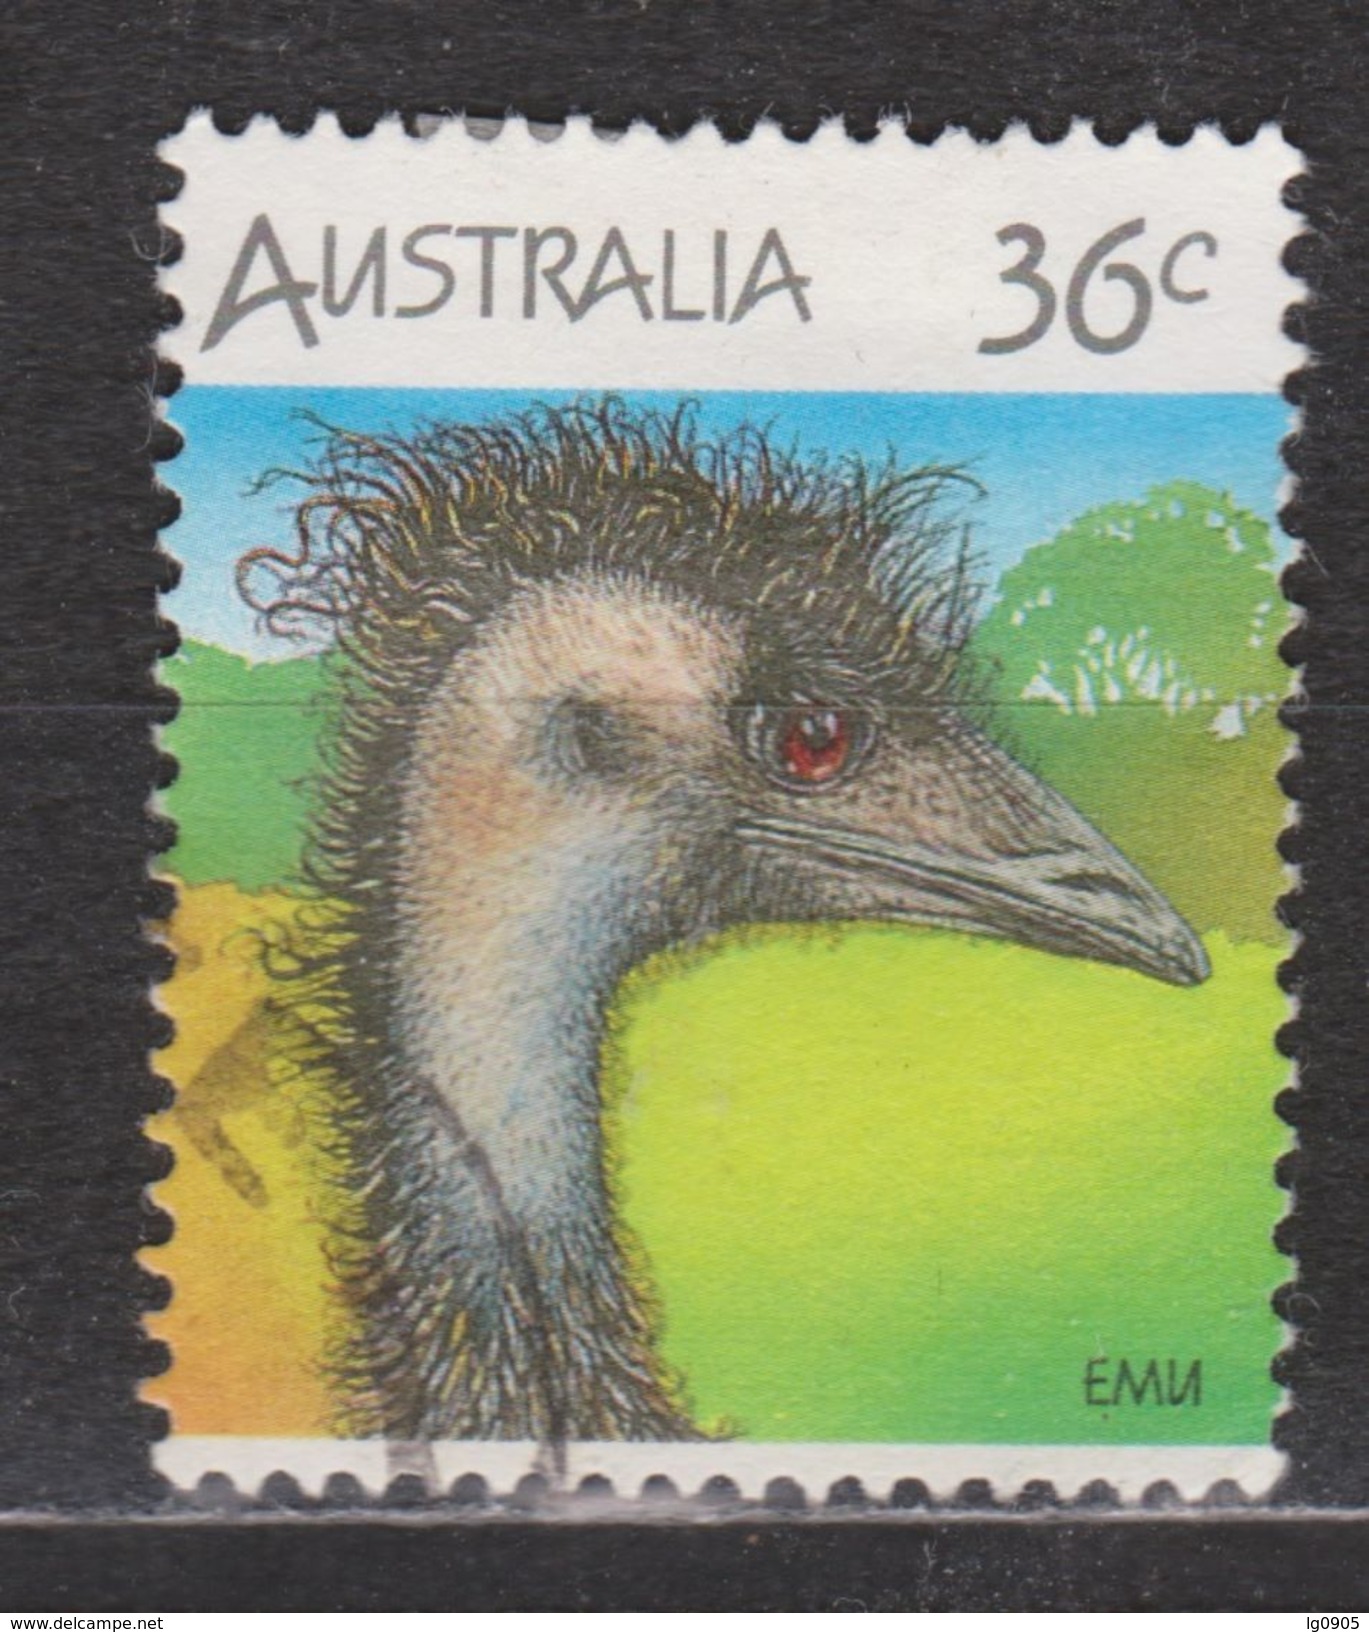 Australie, Australia Used ; Struisvogel Ostrich Autruche Avestruz Emu Emoe 1986 NOW MANY ANIMAL STAMPS FOR SALE - Ostriches